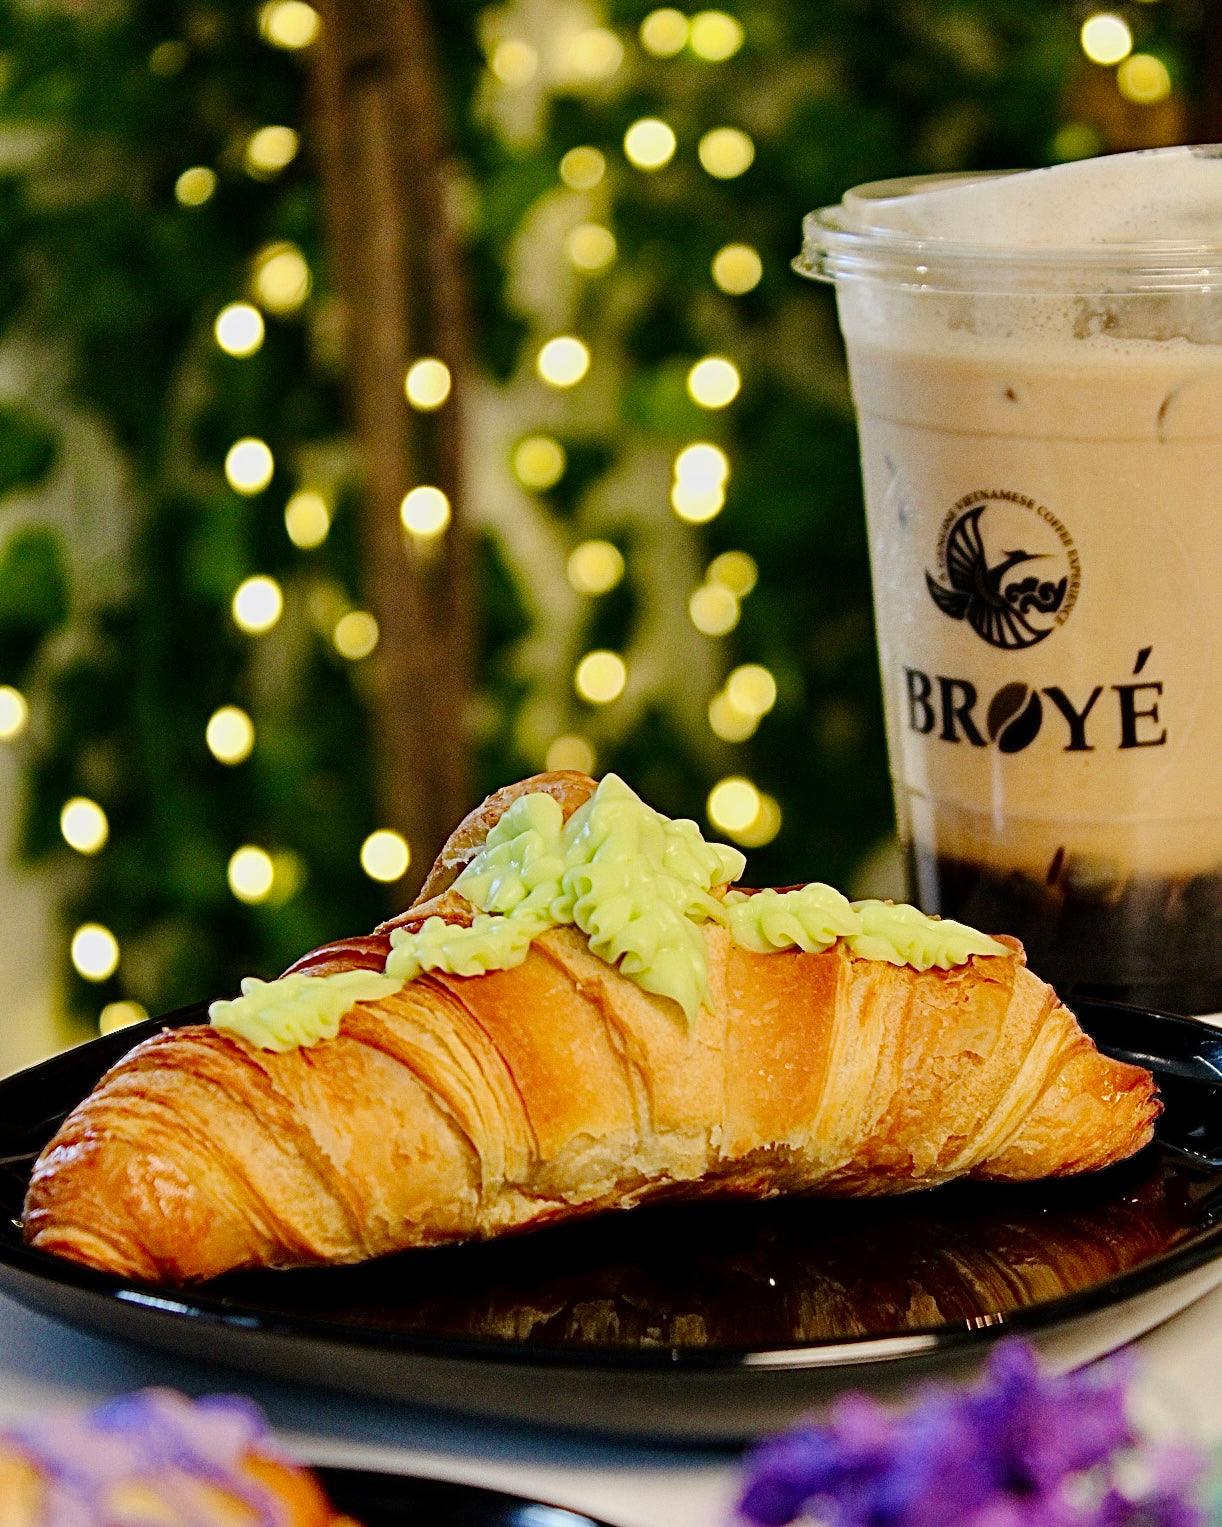 Moissant Tropical Pandan - Broyé Cafe & Bakery